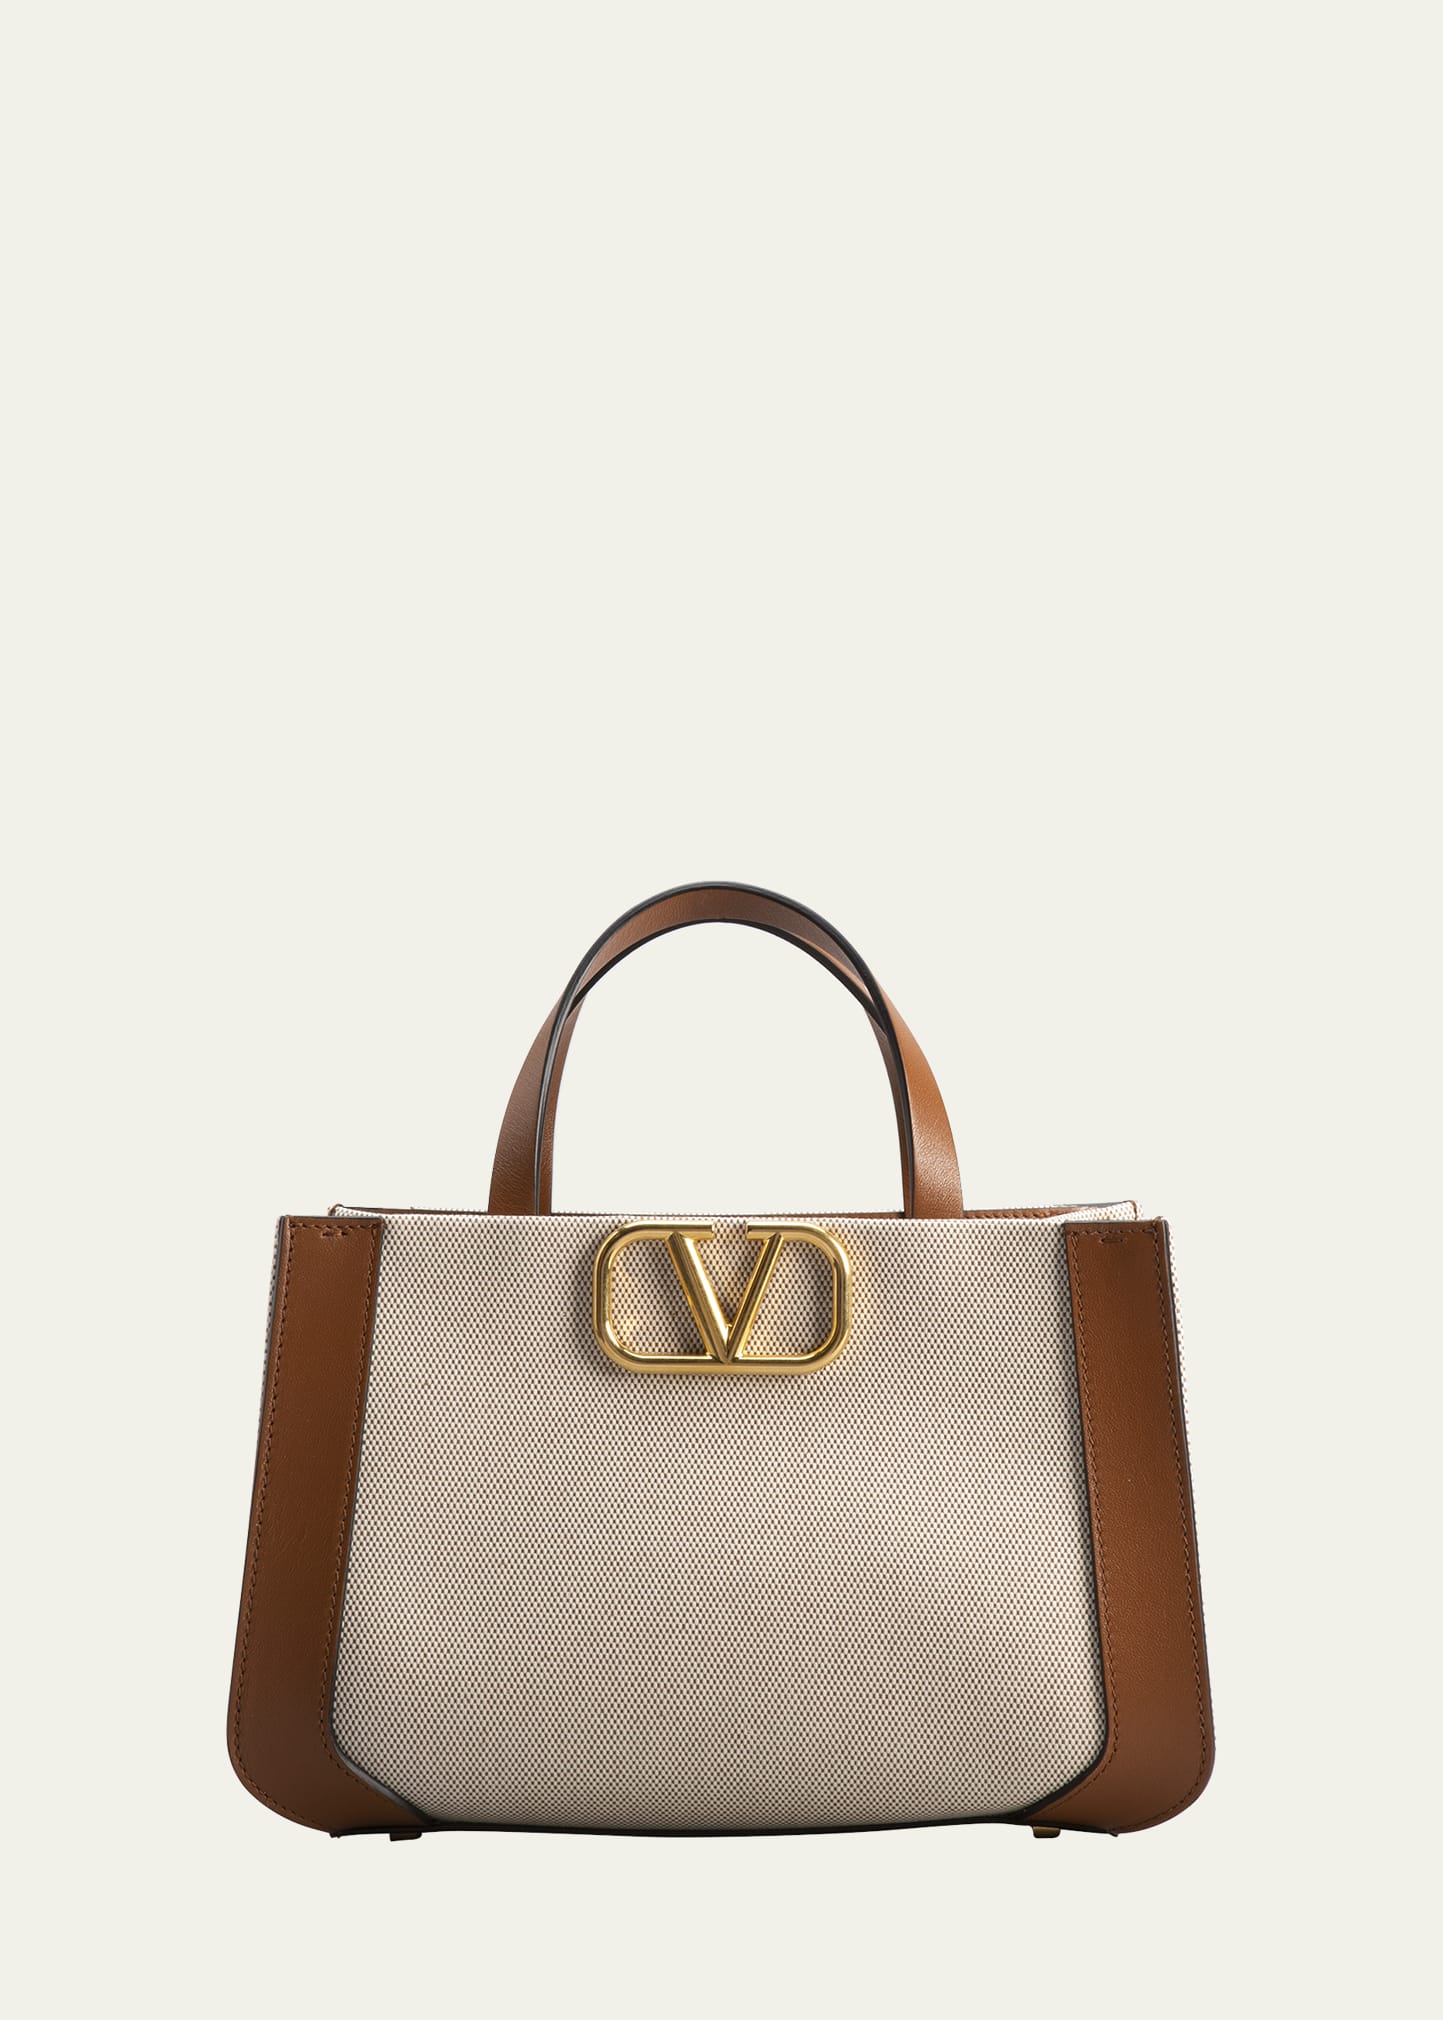 Valentino Bag Handbag | bergdorfgoodman.com